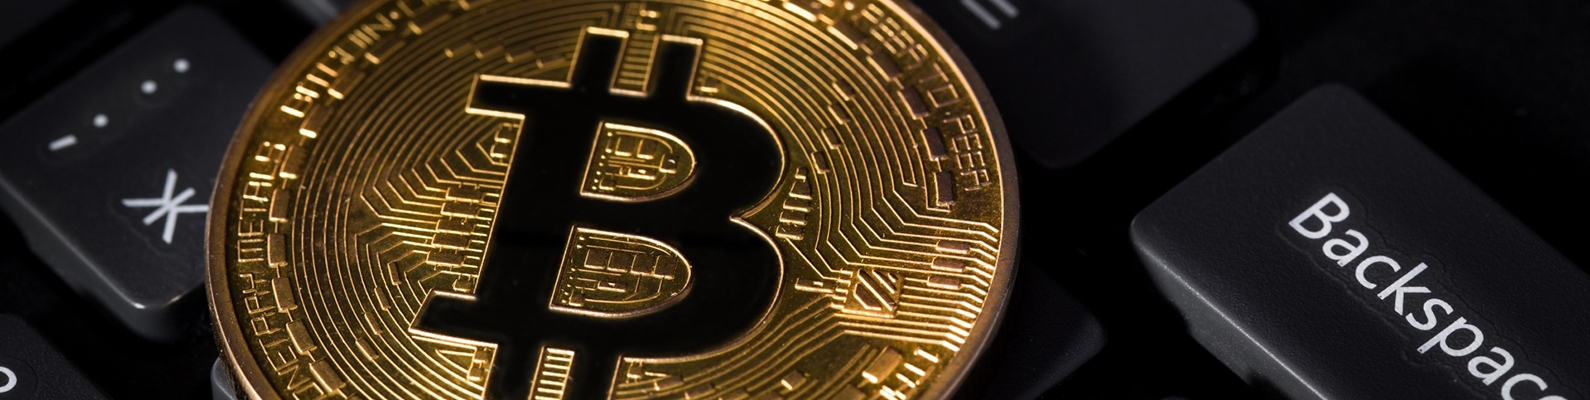 Bitcoin вк обмен биткоин липецк сбербанк